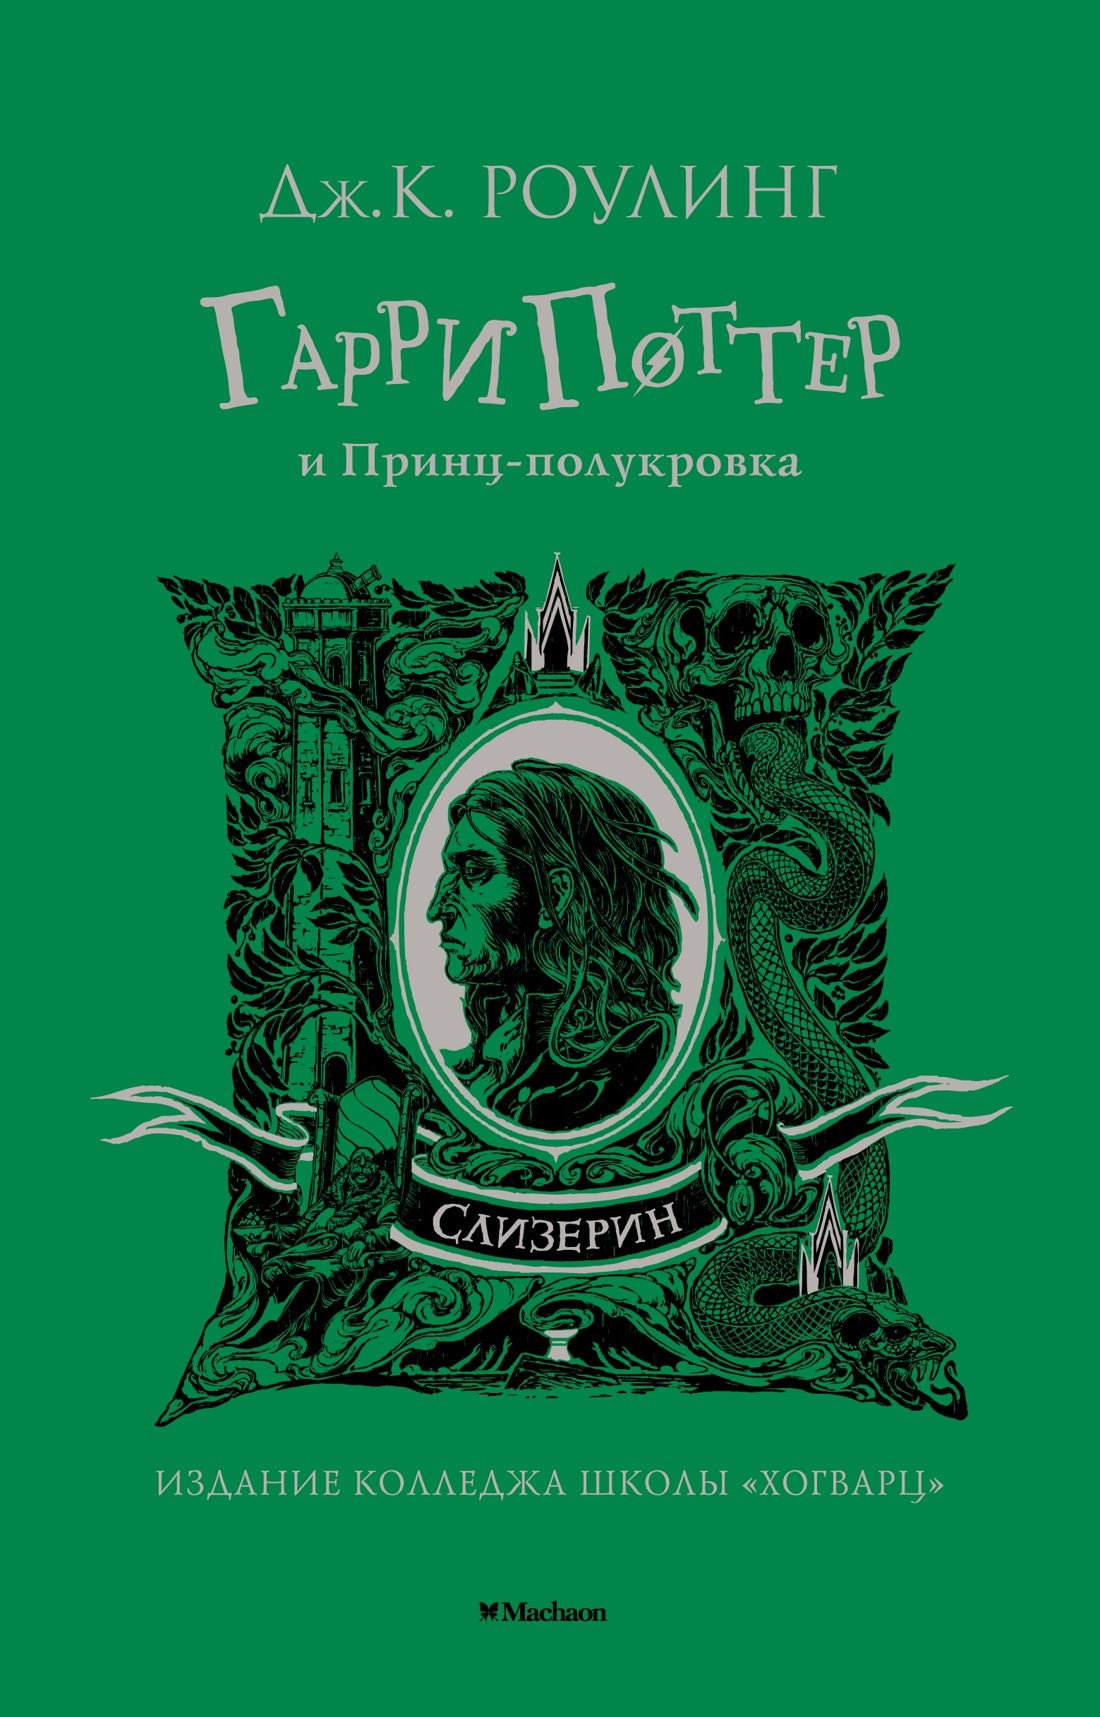 Book “Гарри Поттер и Принц-полукровка (Слизерин)” by Дж.К. Роулинг — 2022